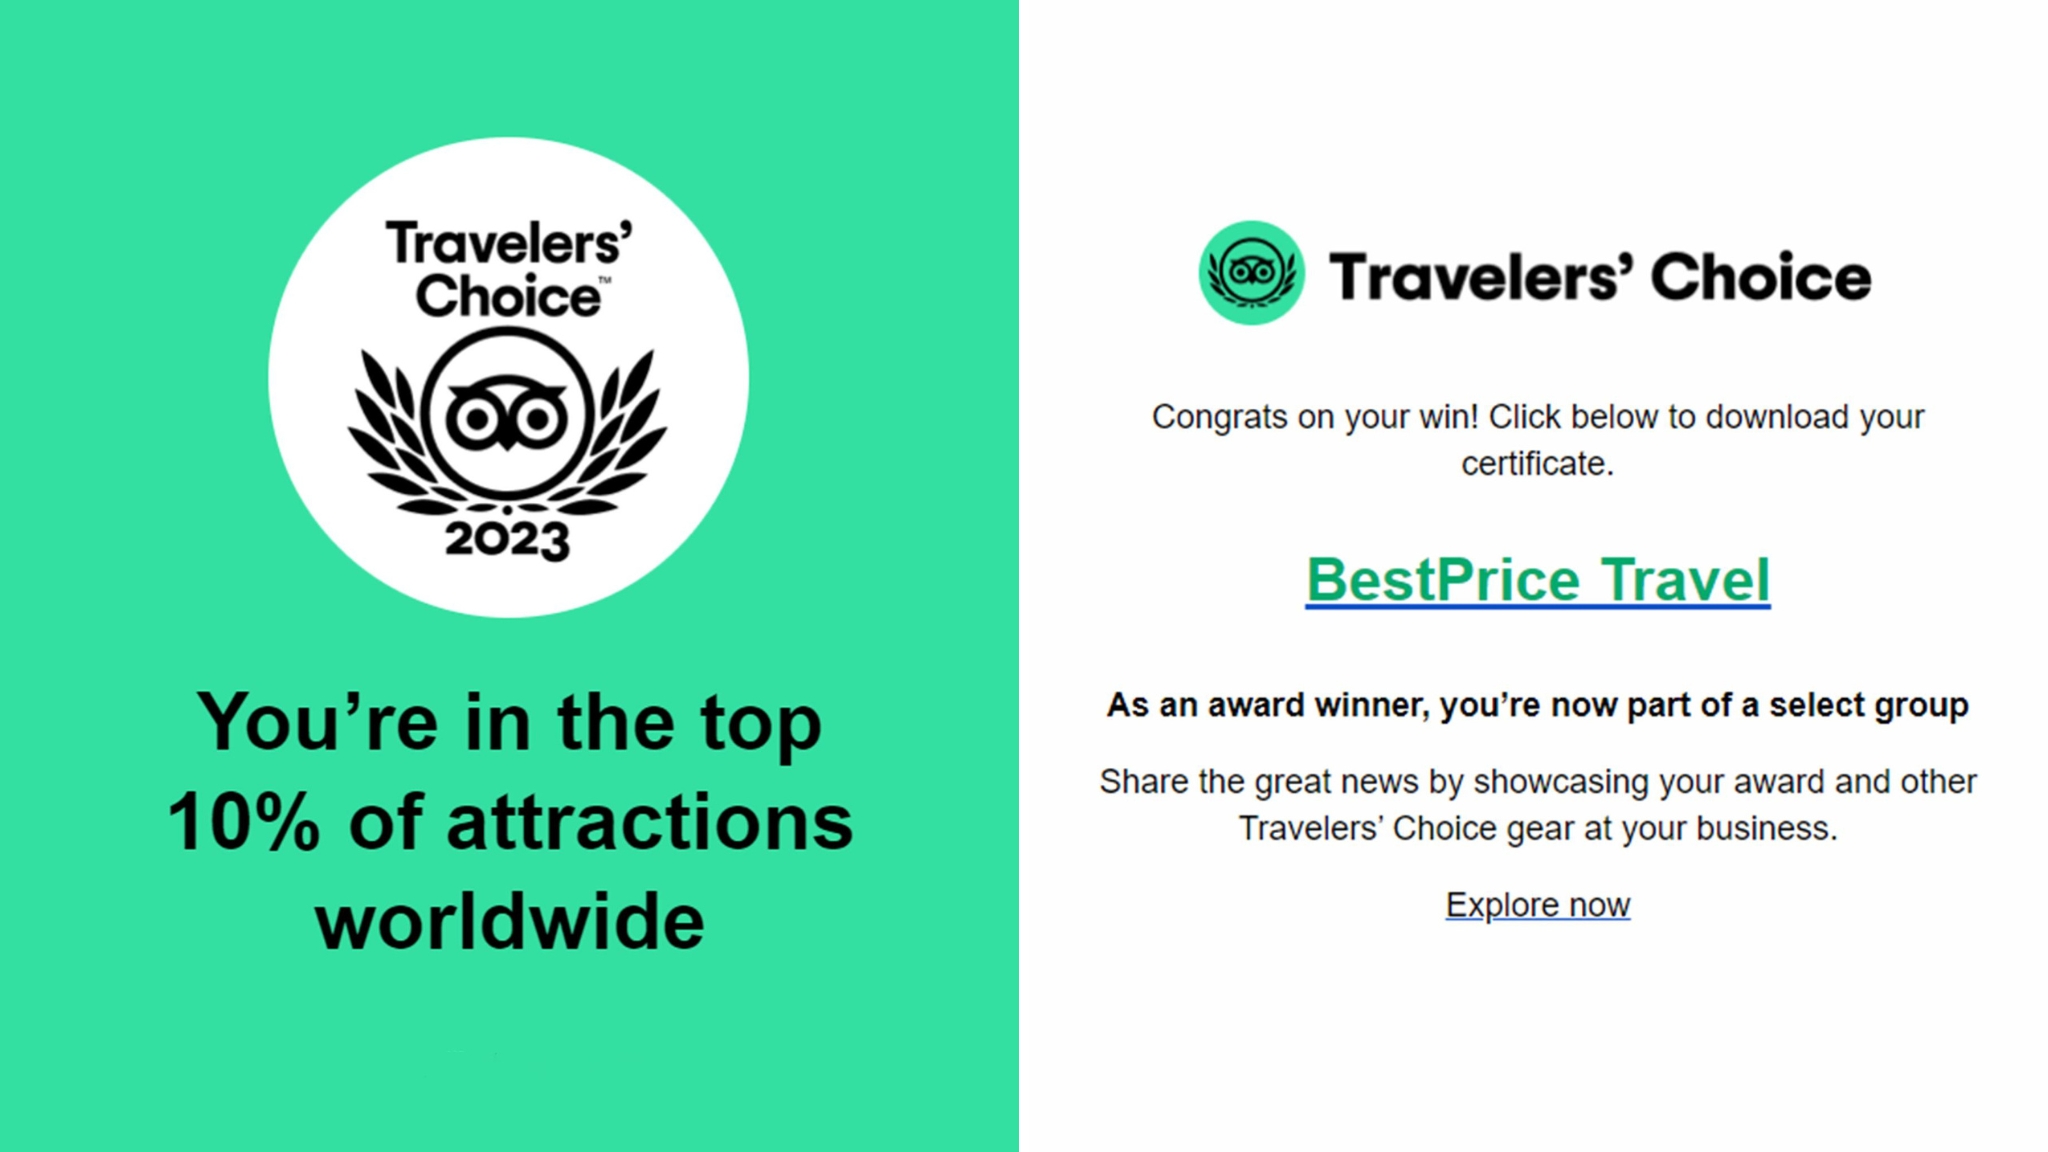 BestPrice Travel won the 2023 TripAdvisor Traveler’s Choice Award